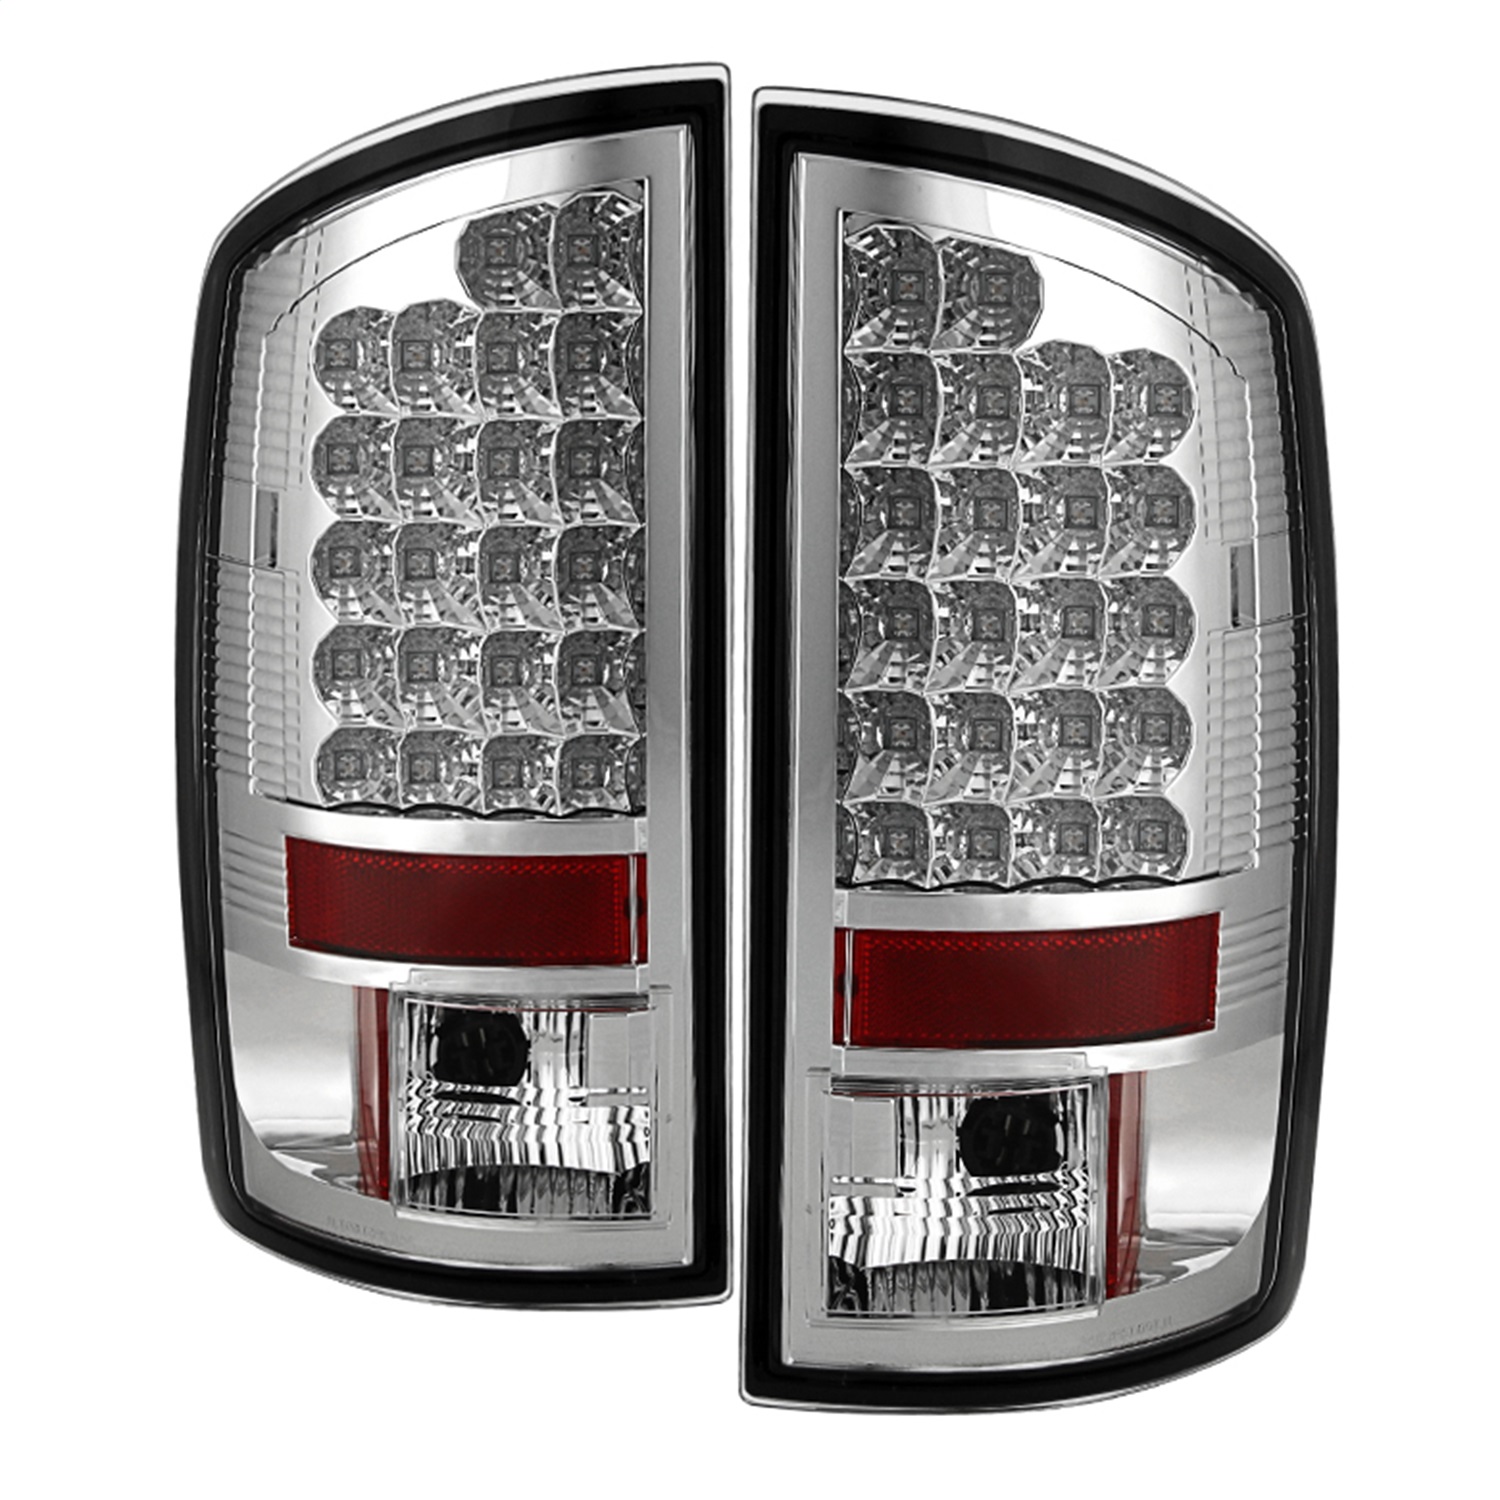 Spyder Auto 5002563 LED Tail Lights Fits 02-06 Ram 1500 Ram 2500 Ram 3500